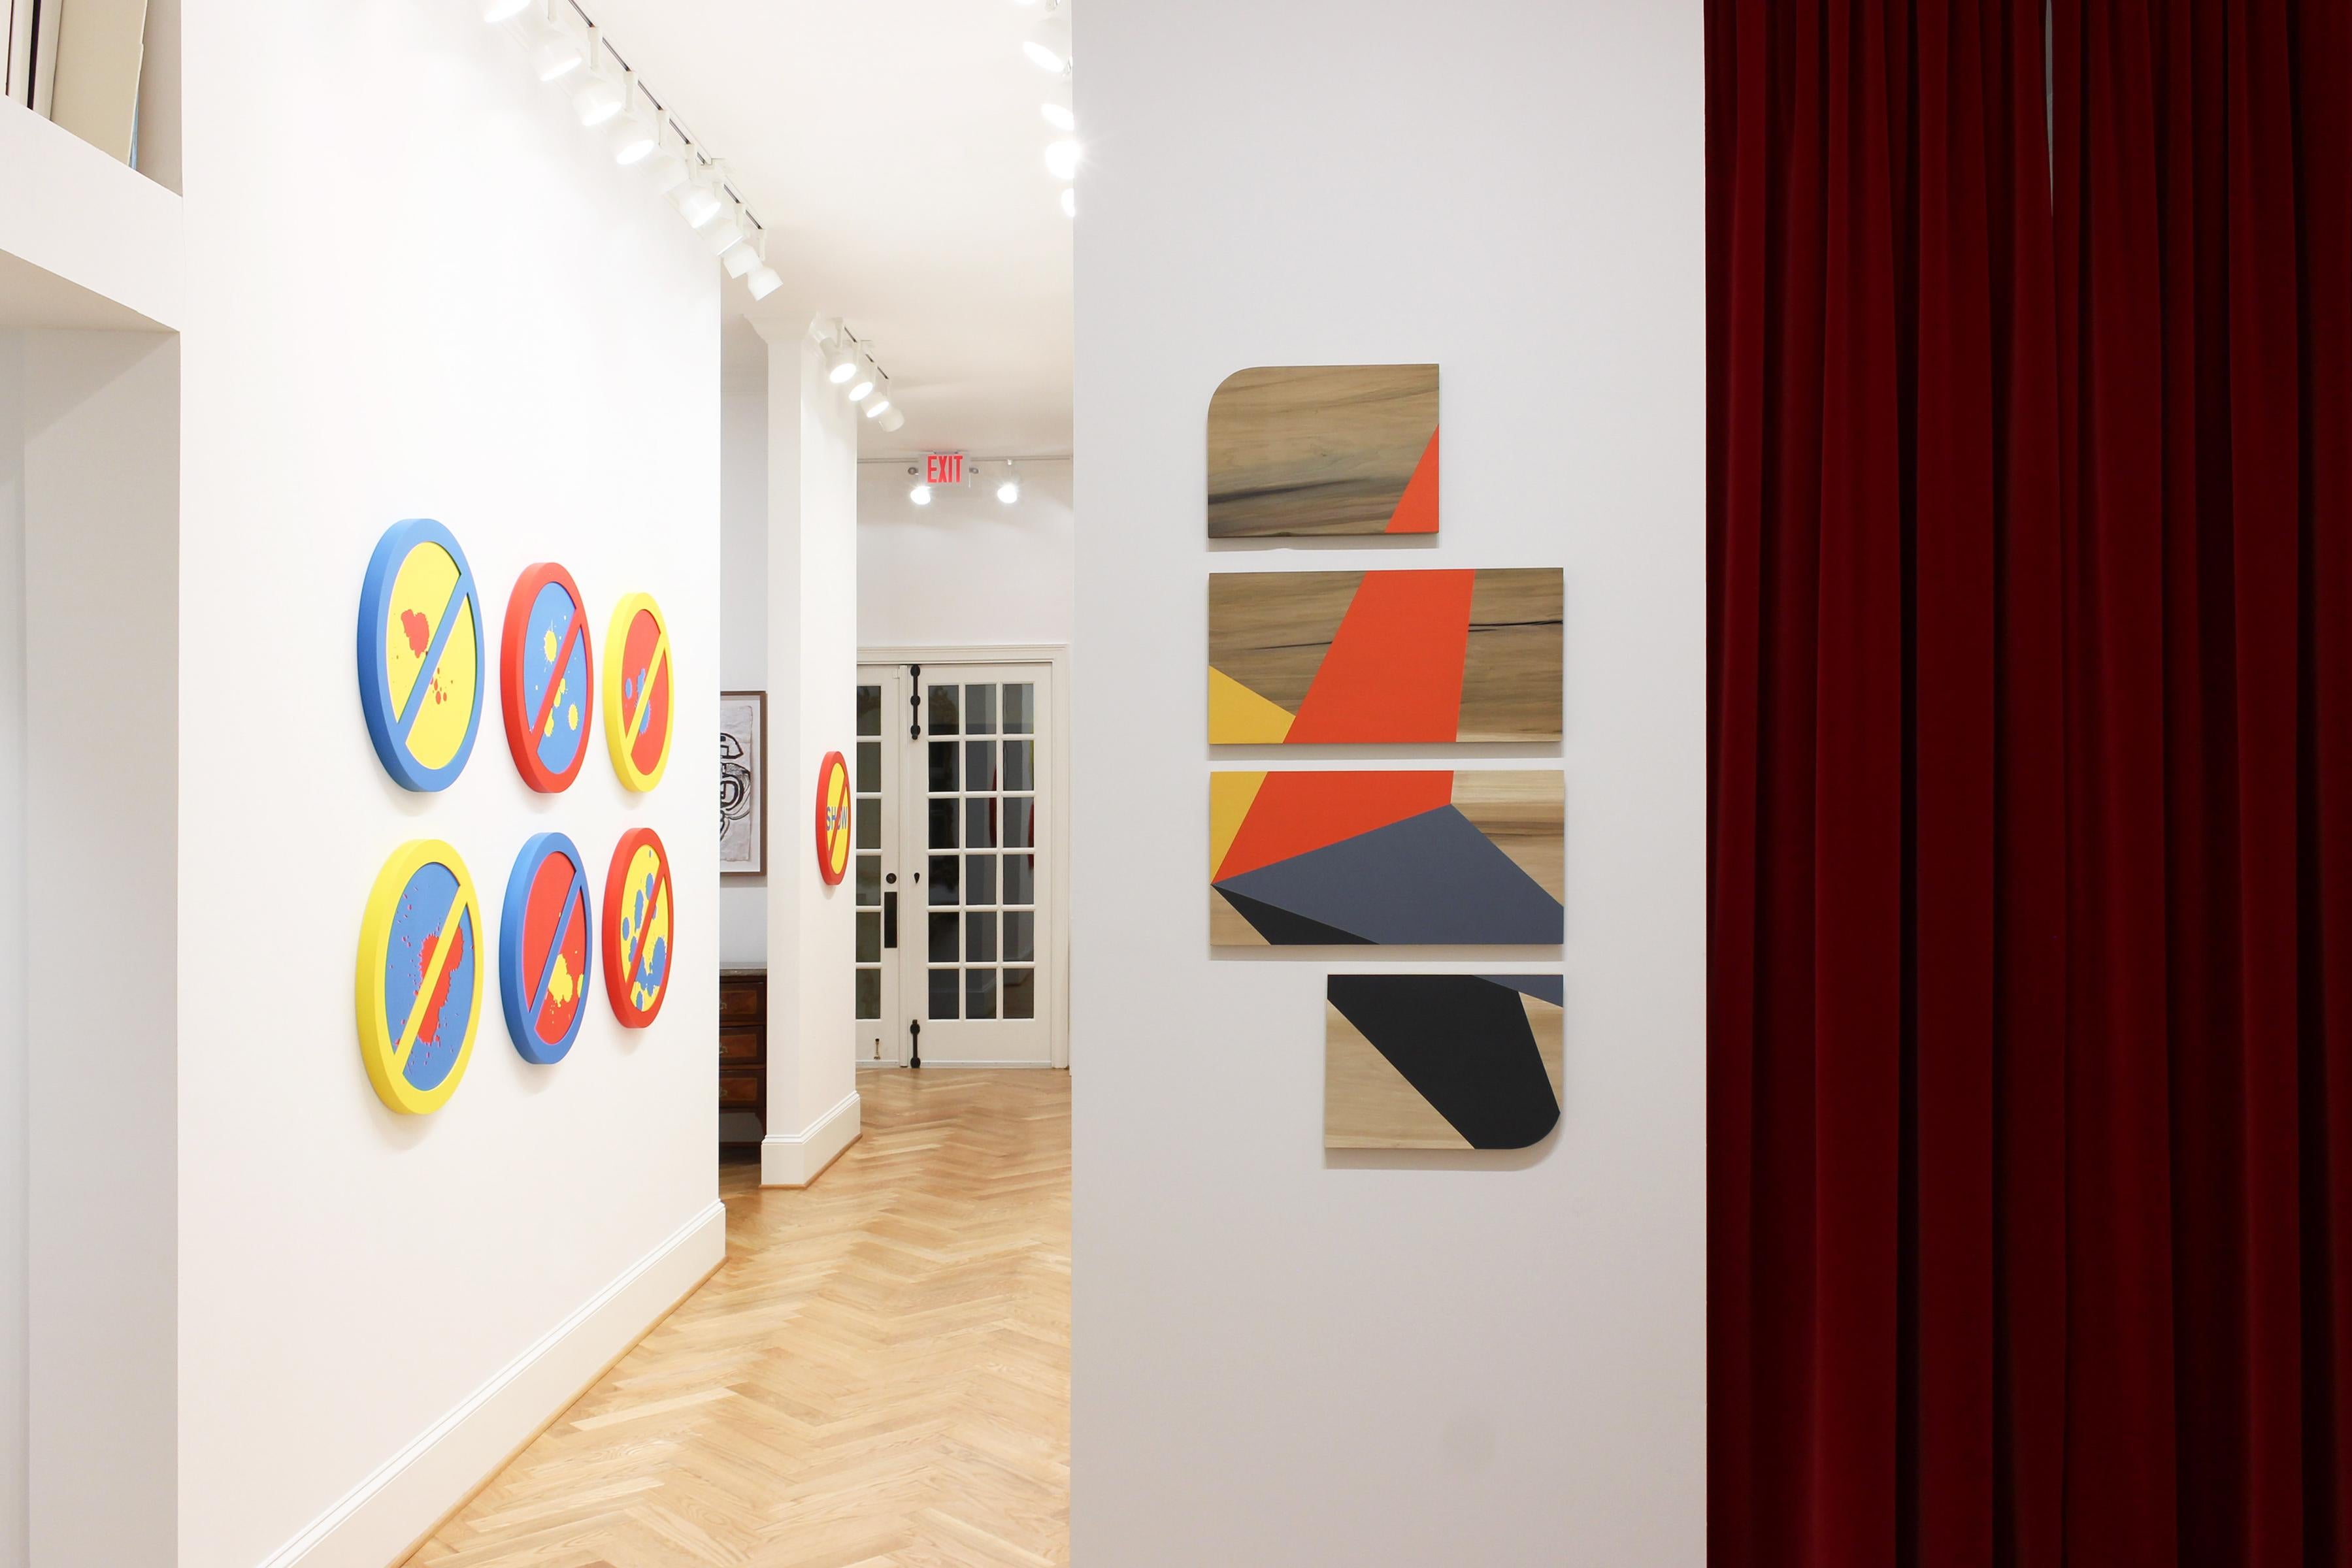 'Revolution' colorful minimalist work on panel, wood grain, Carmen Herrera - Painting by Nancy Talero